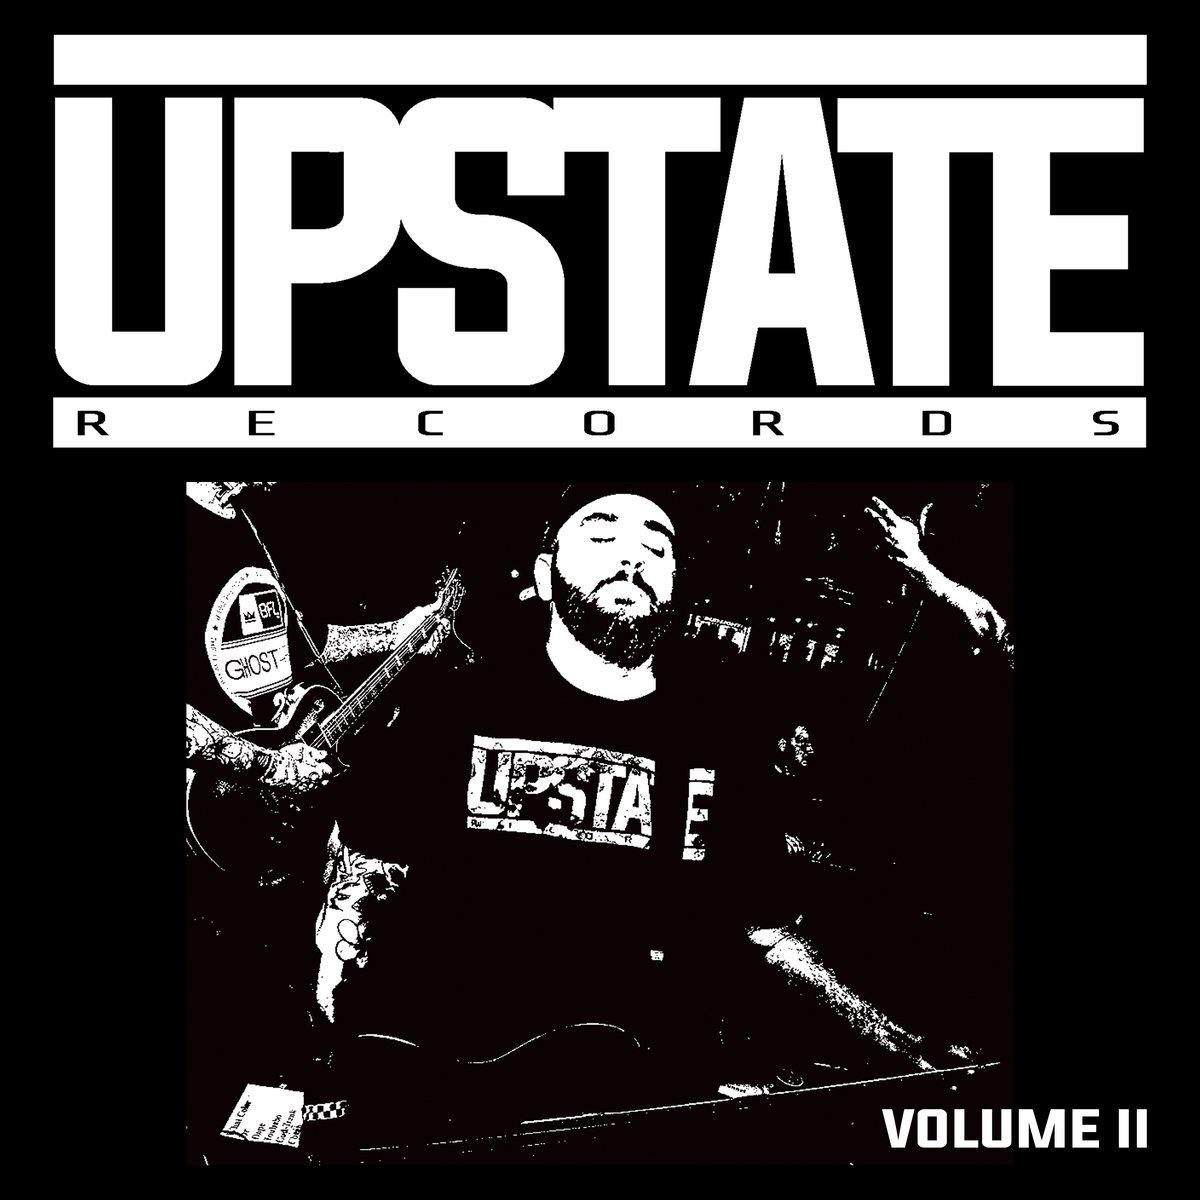 Buy – Upstate Comp "Volume II" CD – Band & Music Merch – Cold Cuts Merch